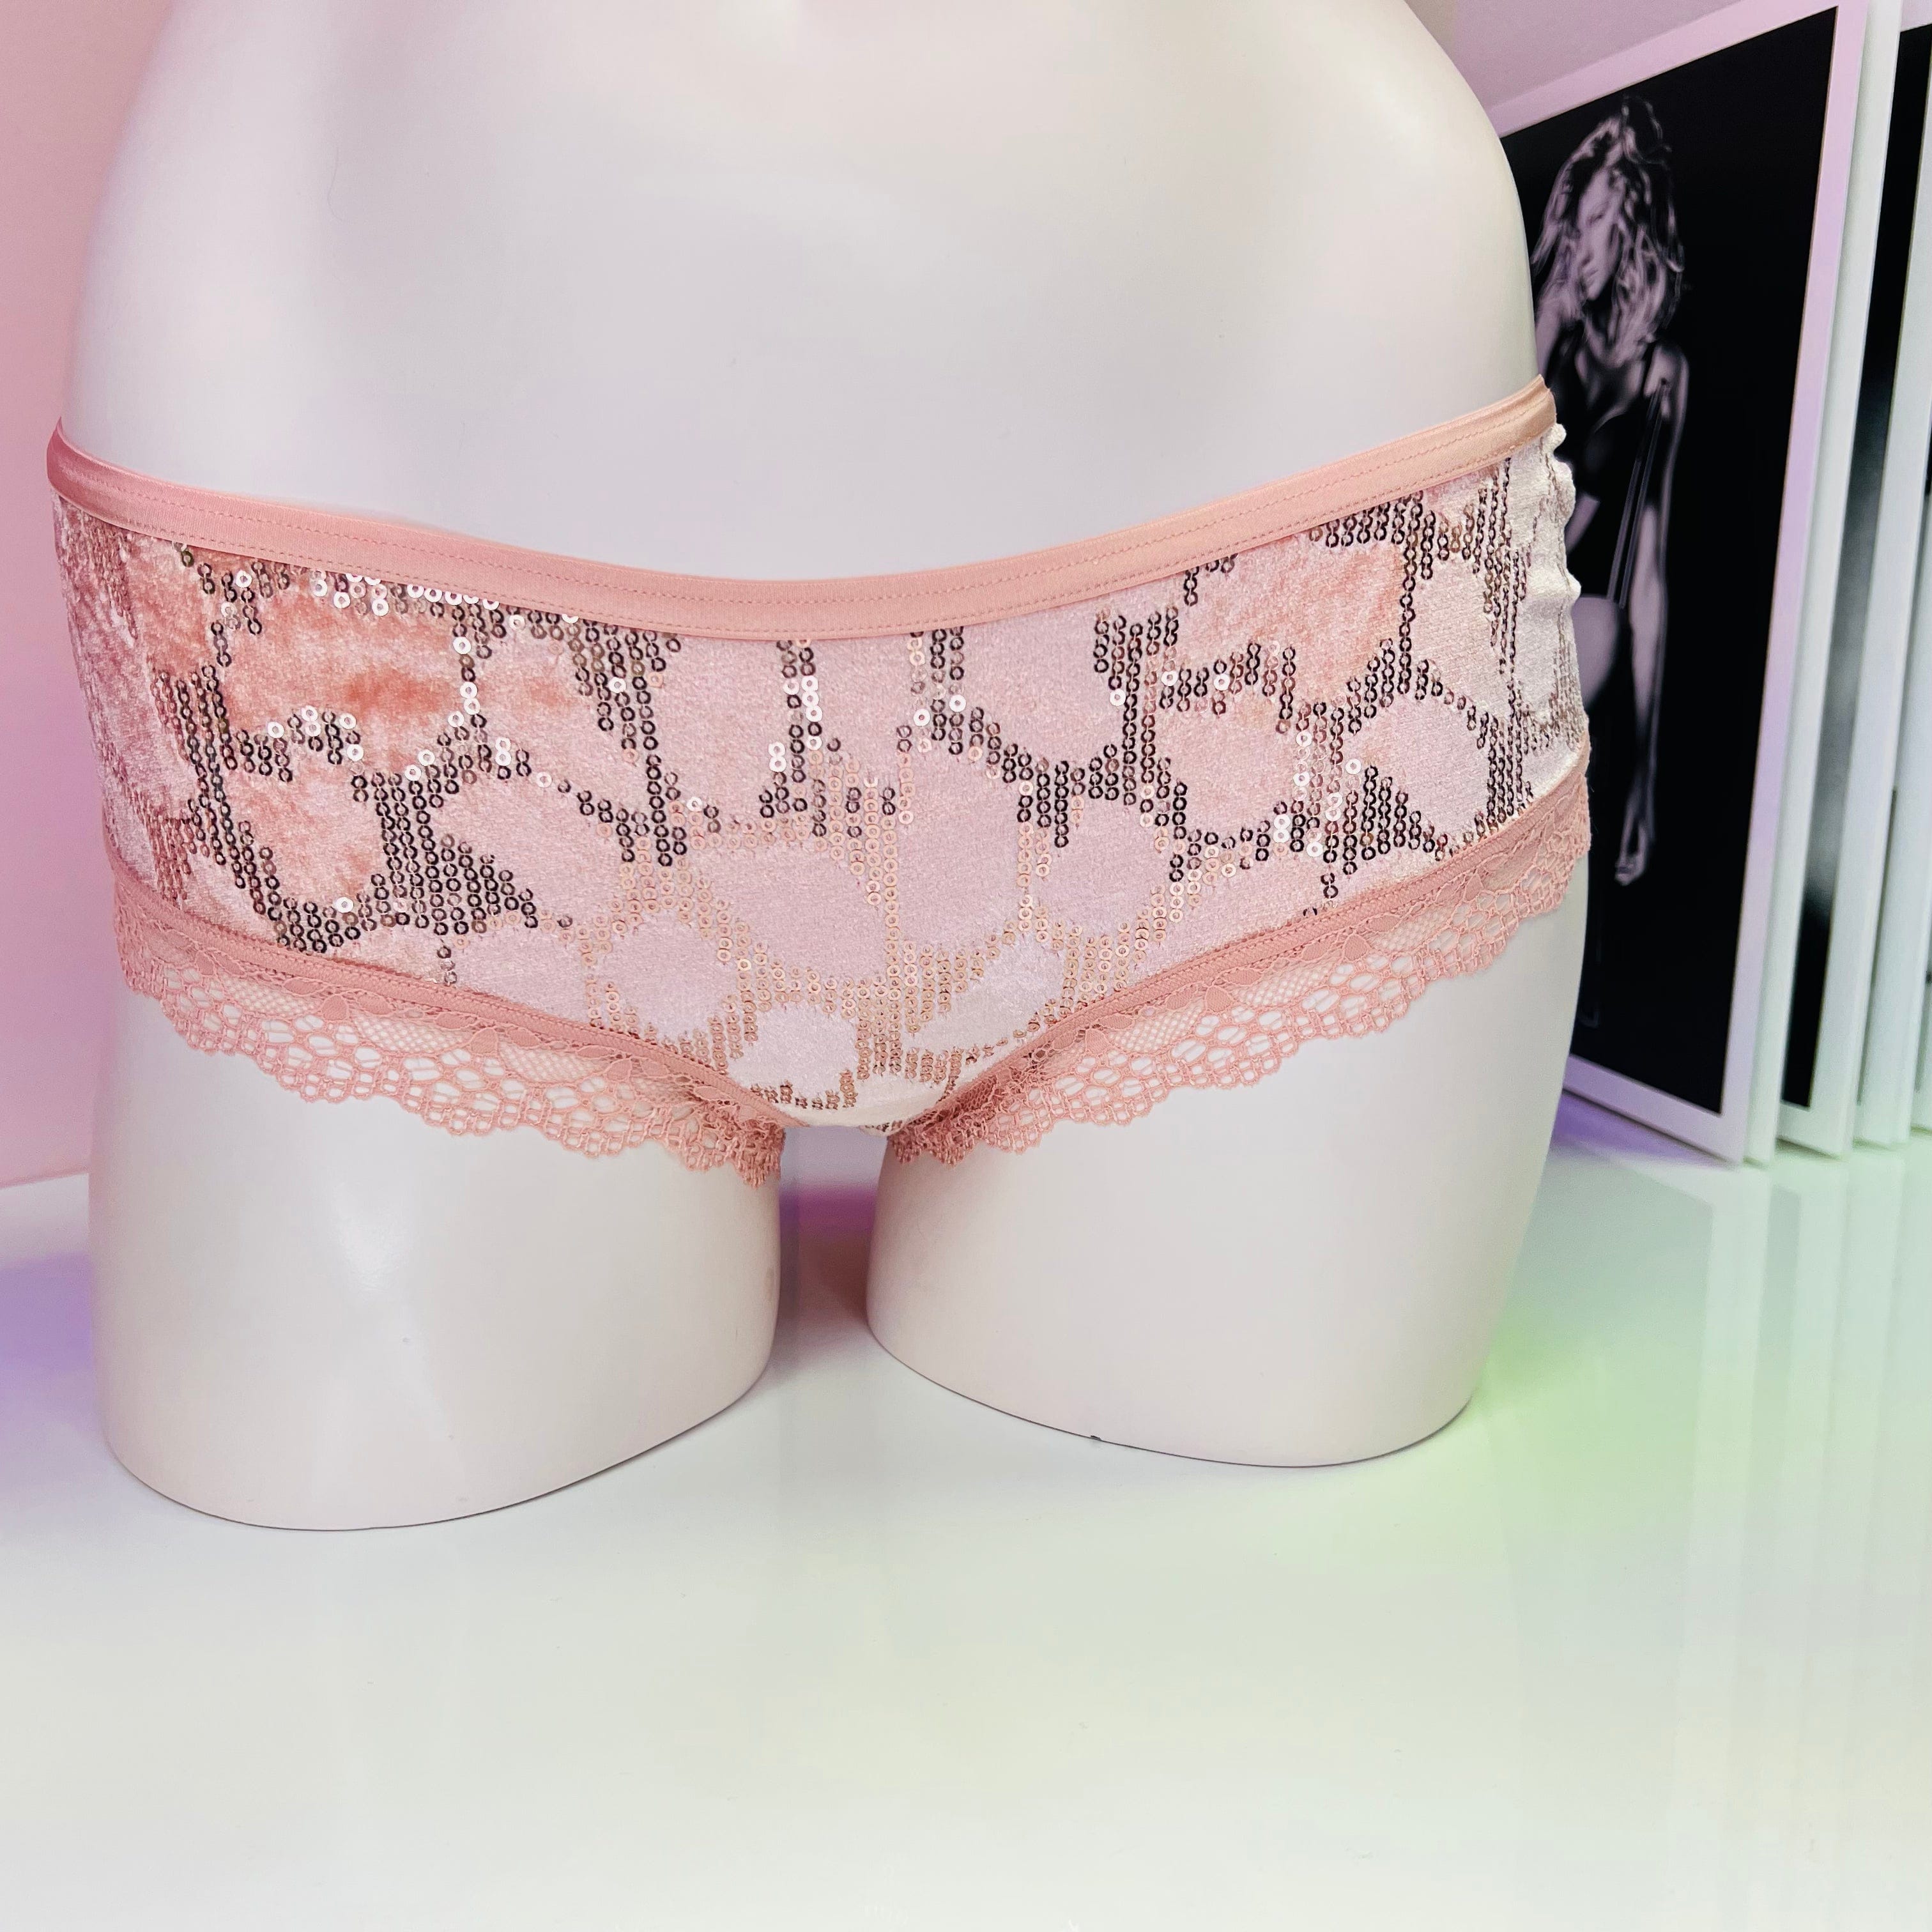 Kalhotky s flitry - L / Broskvová / Nové se štítky - Cheeky Victoria’s Secret